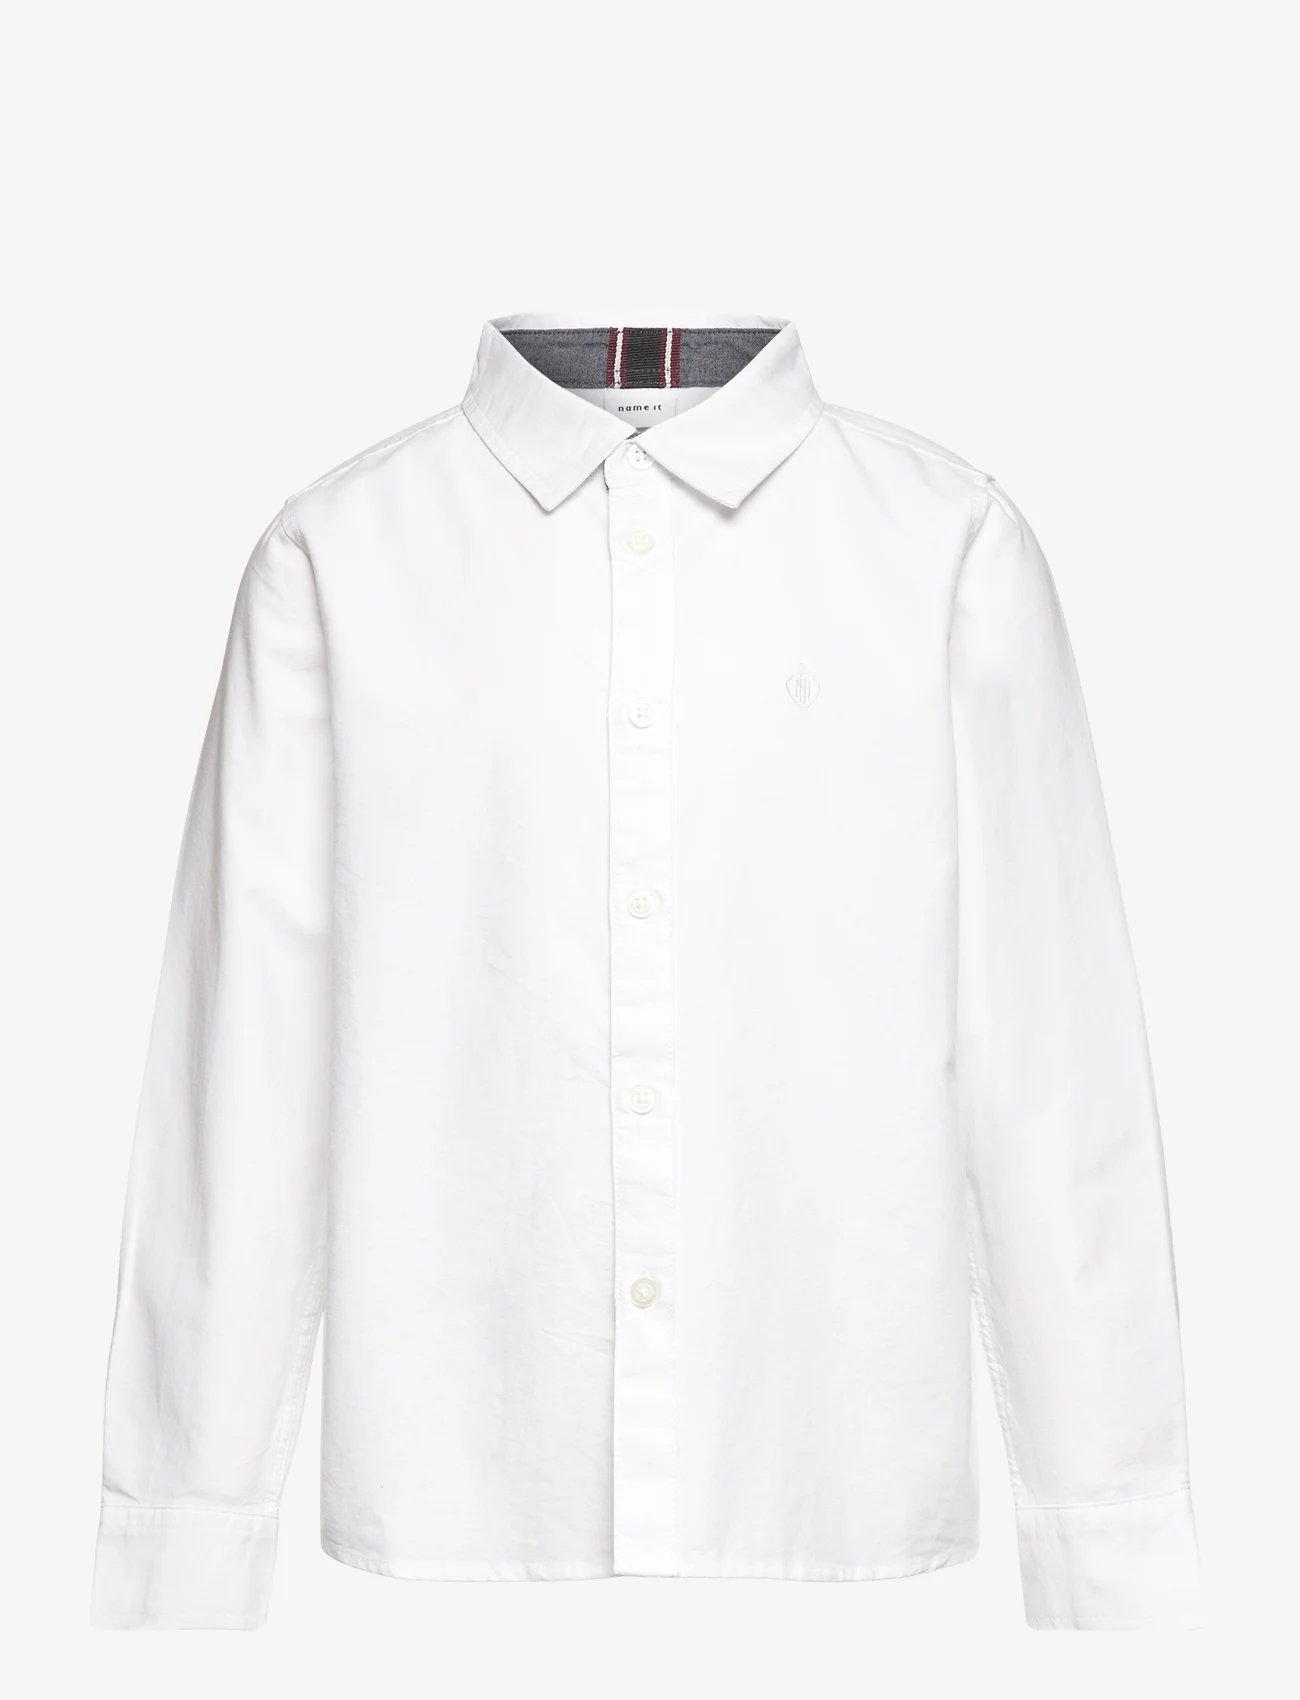 name it - NKMNEWSA LS SHIRT NOOS - langærmede skjorter - bright white - 0